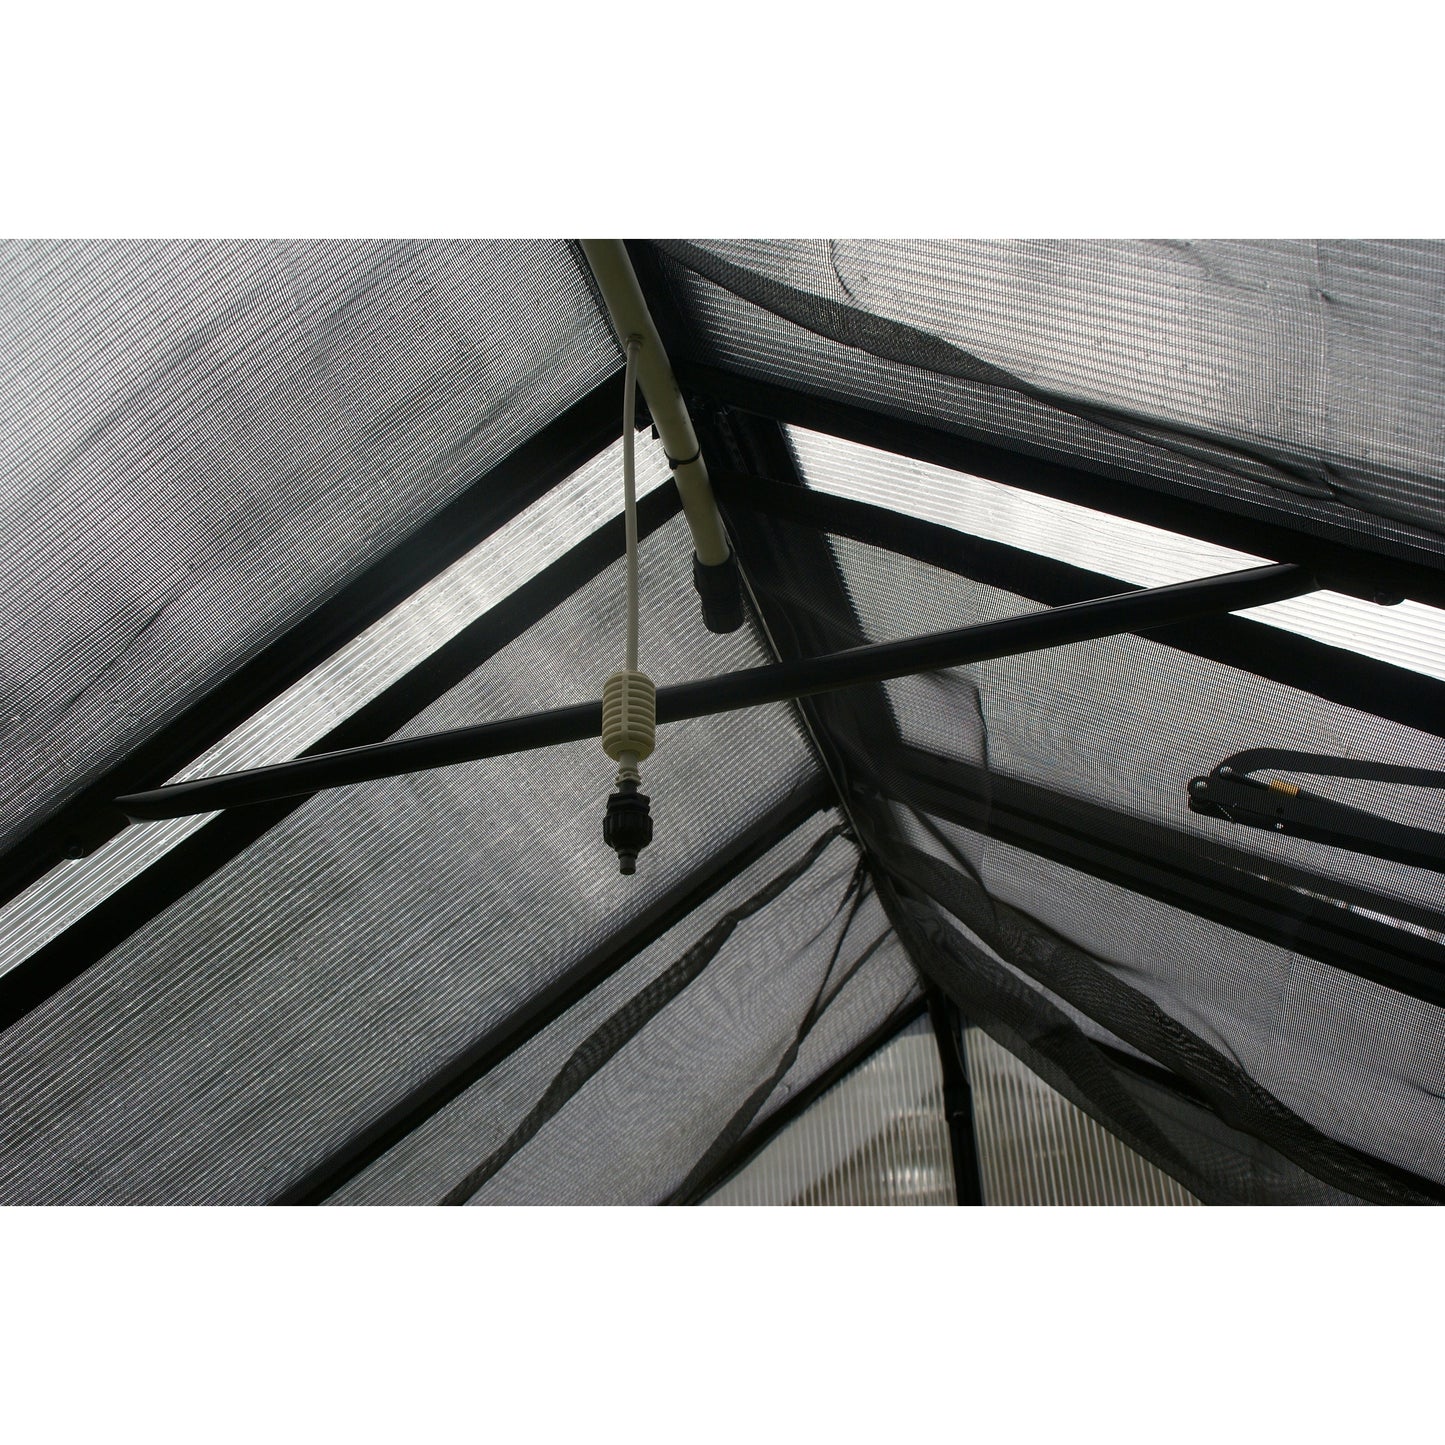 Mont Greenhouse 8FTx 24FT - Black Finish - Premium Package MONT-24-BK-PREMIUM